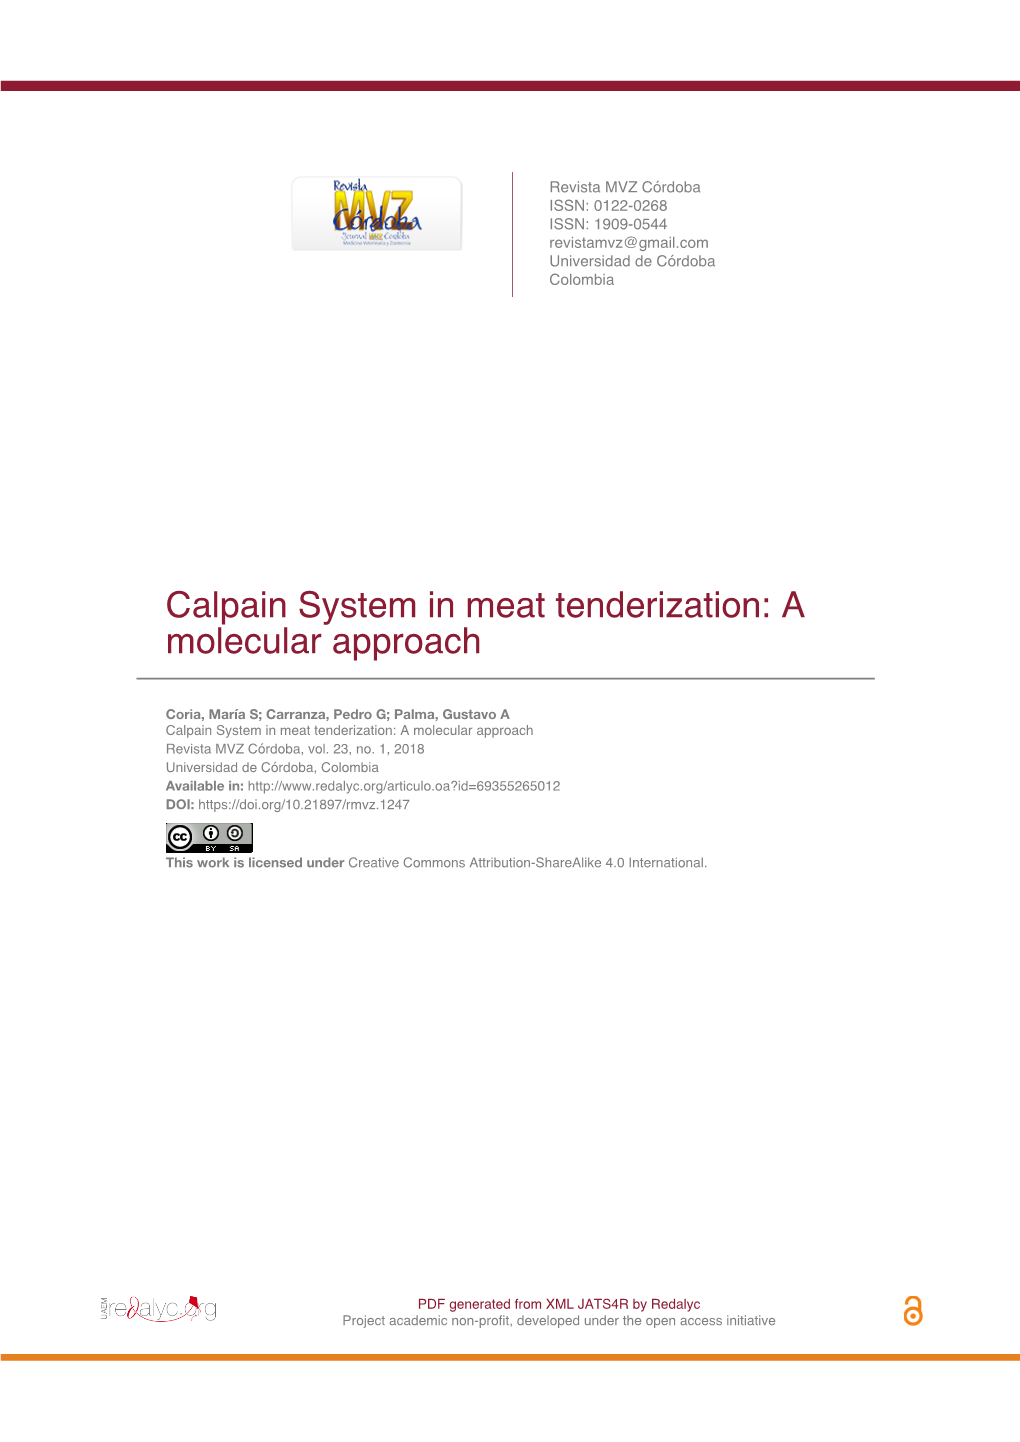 Calpain System in Meat Tenderization: a Molecular Approach